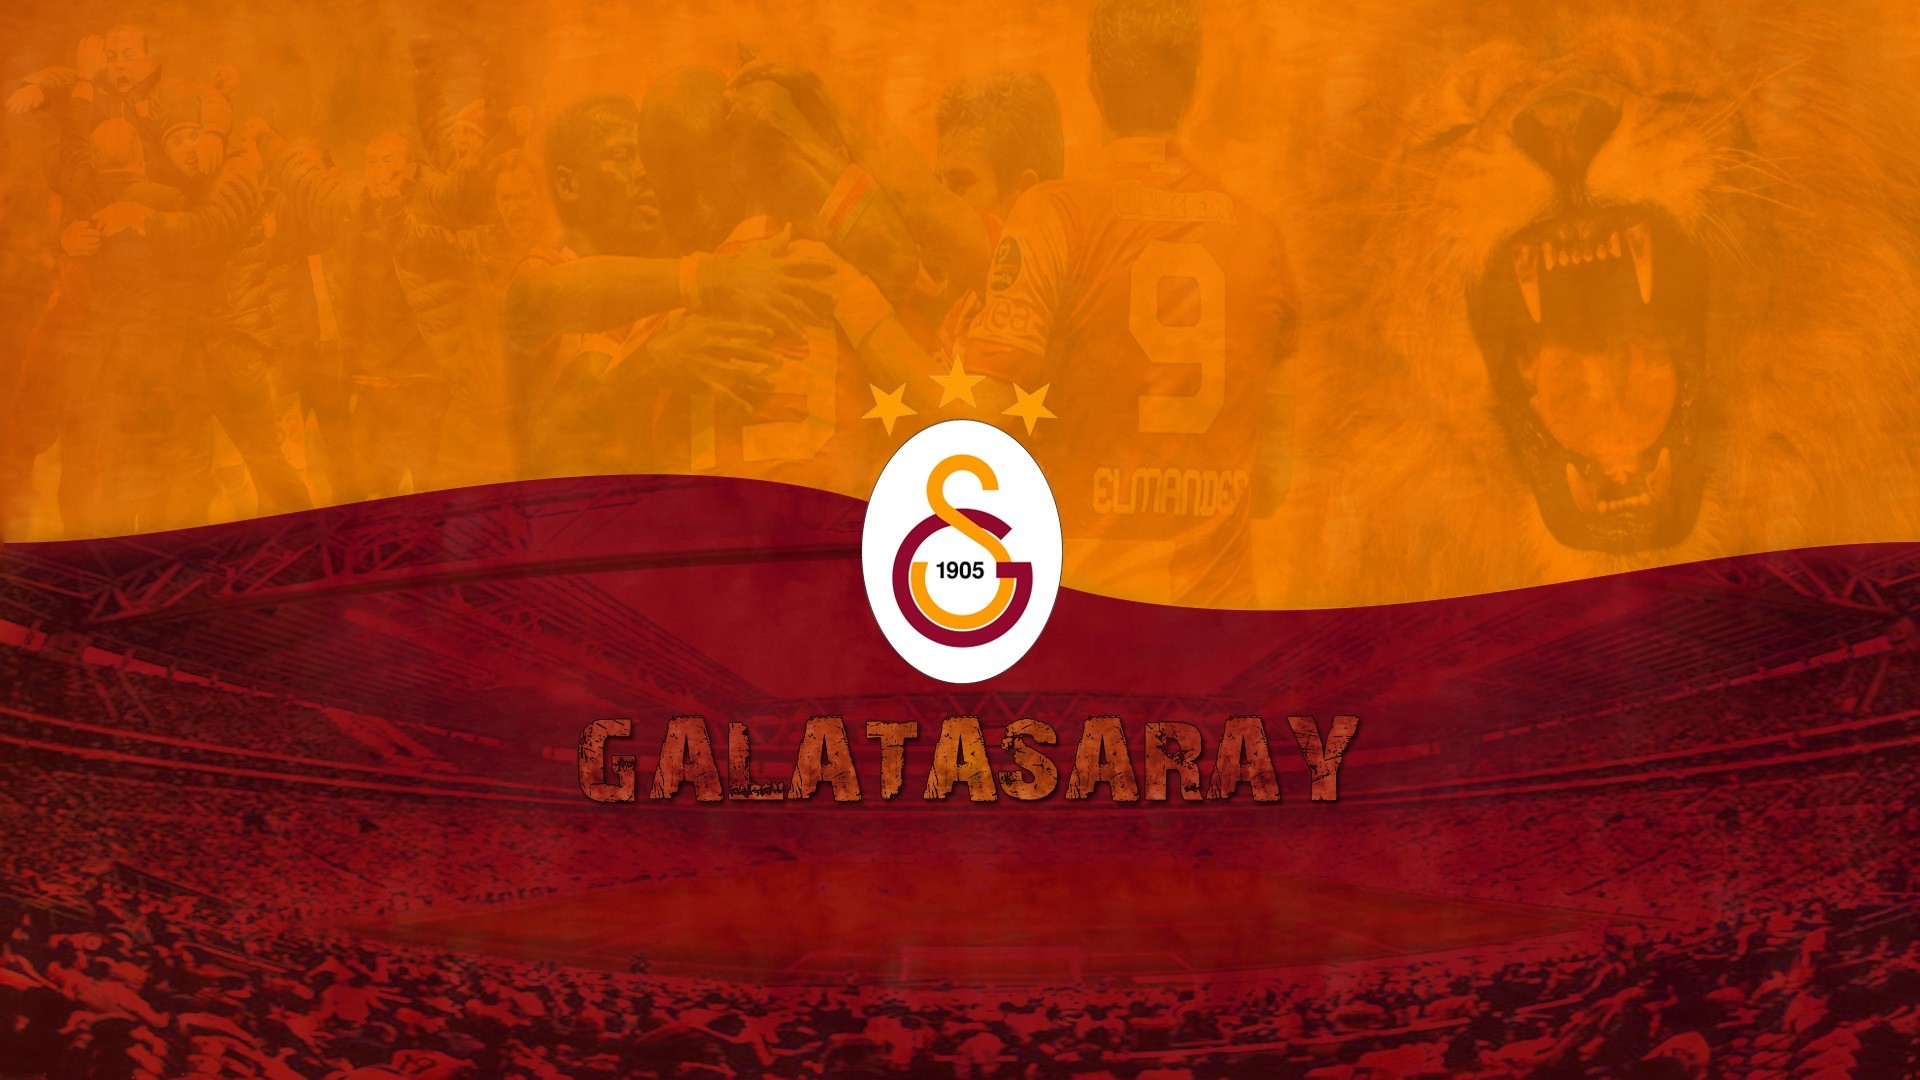 Galatasaray S.K., Sports, Soccer Clubs, Soccer Wallpaper